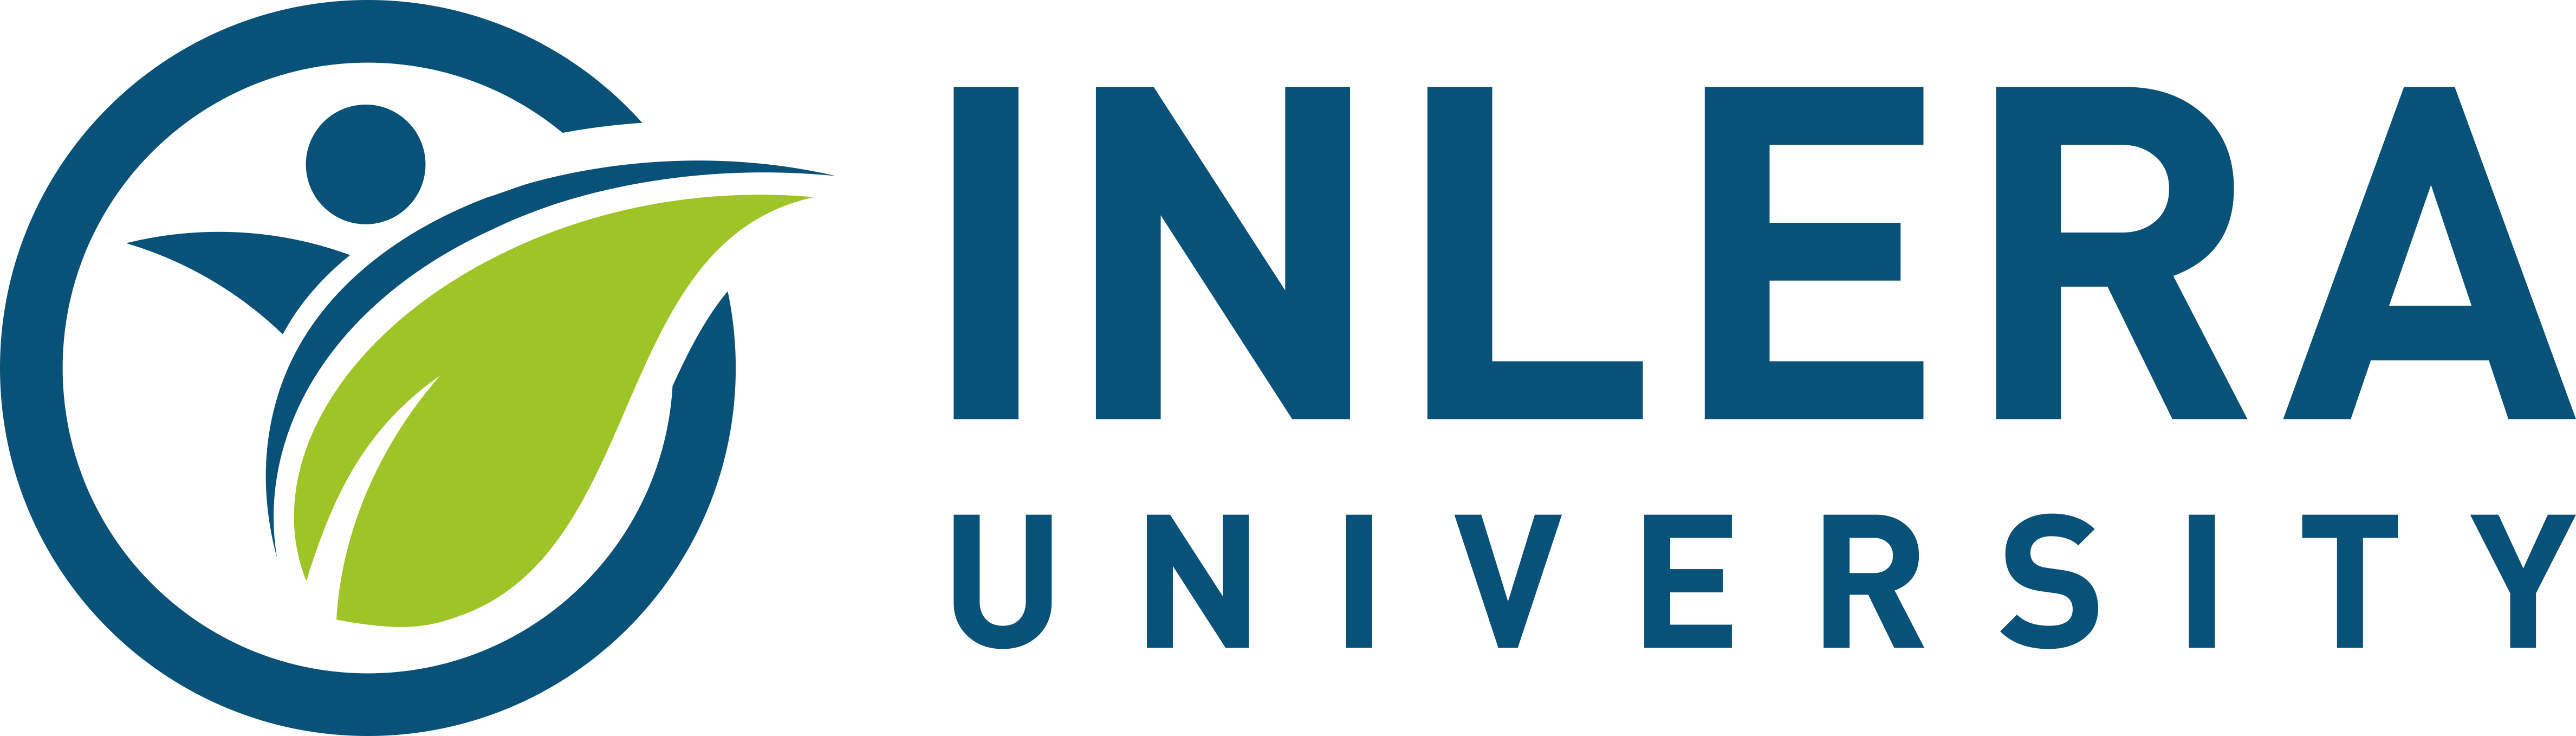 Inlera University Logo Transparent.png